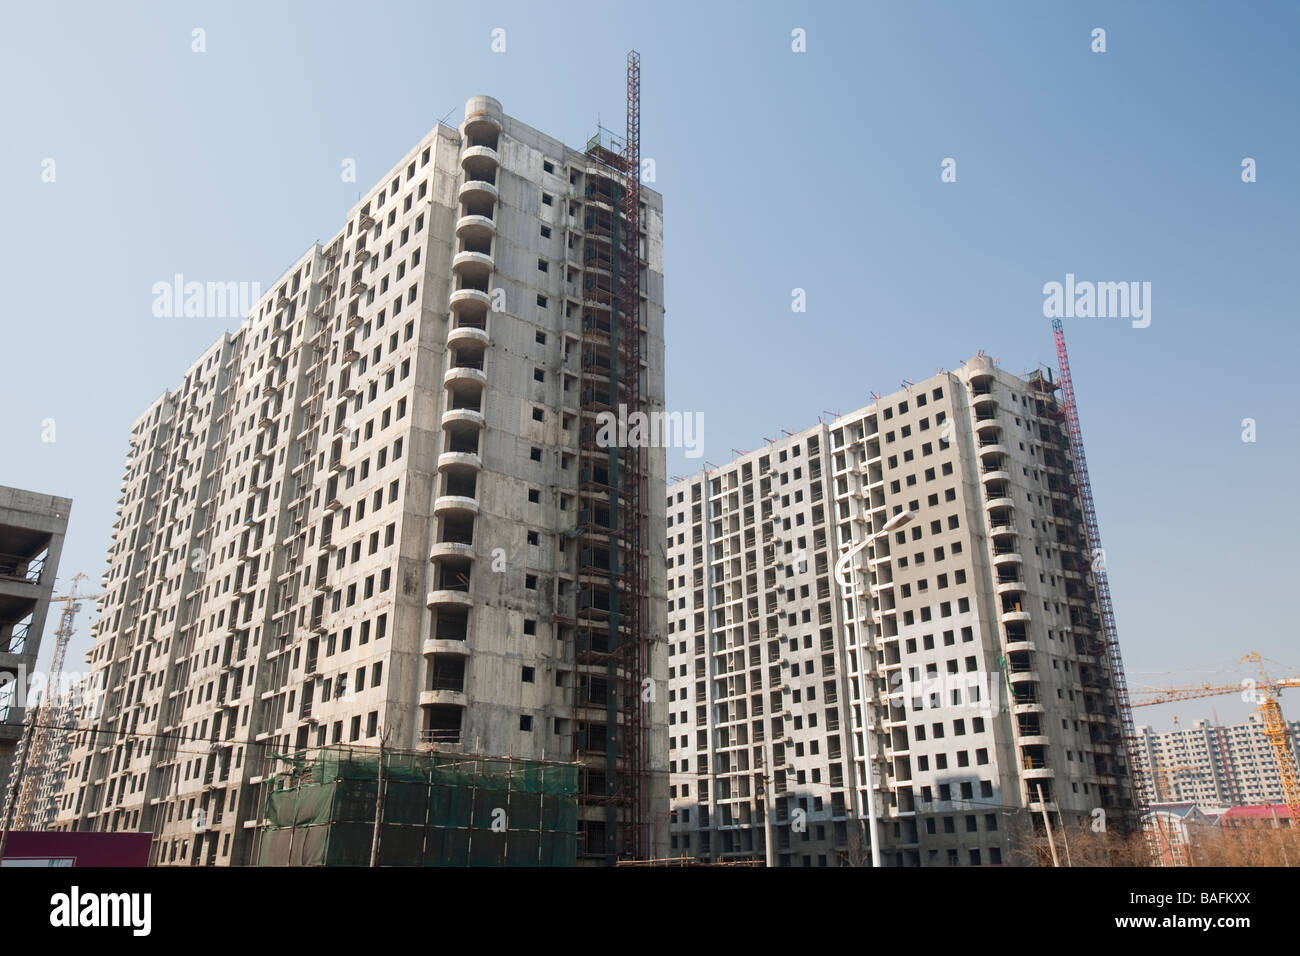 New apartment blocks being built in china near Beijing Stock Photo